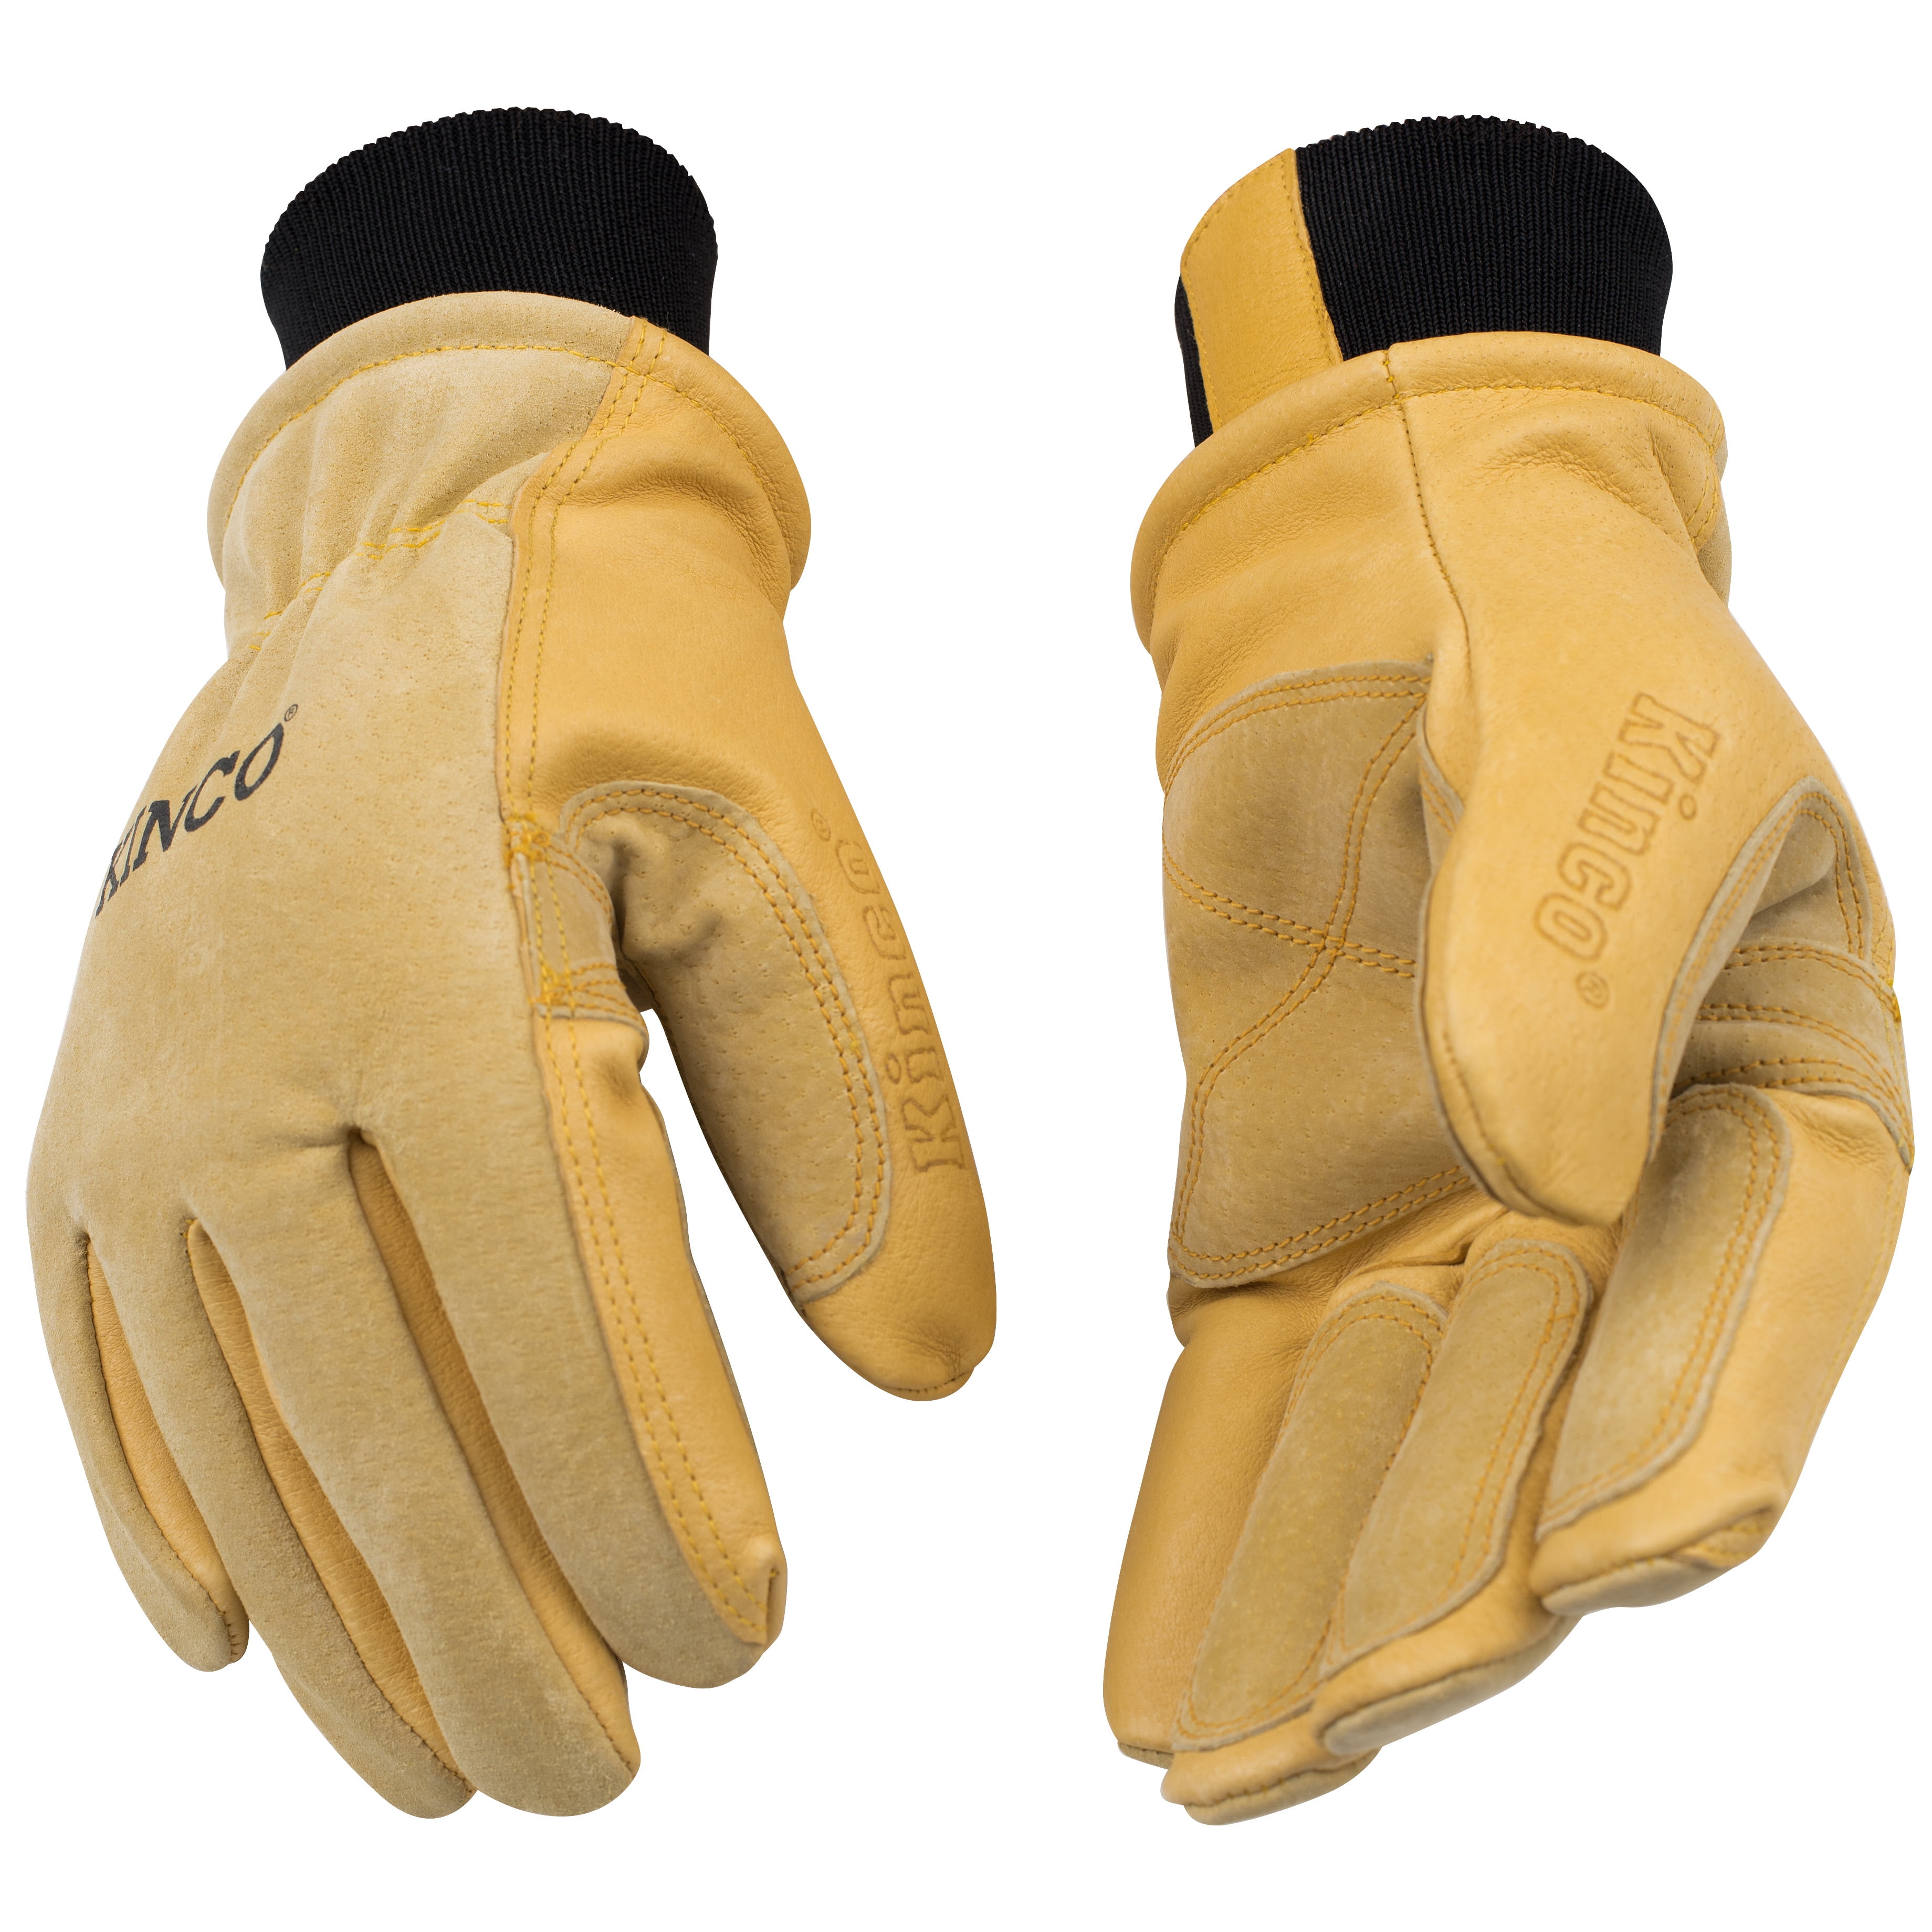 KINCO 901-S Men's Pigskin Leather Ski Glove, Heat Keep Thermal Lining,  Draylon Thread, Small, Golden